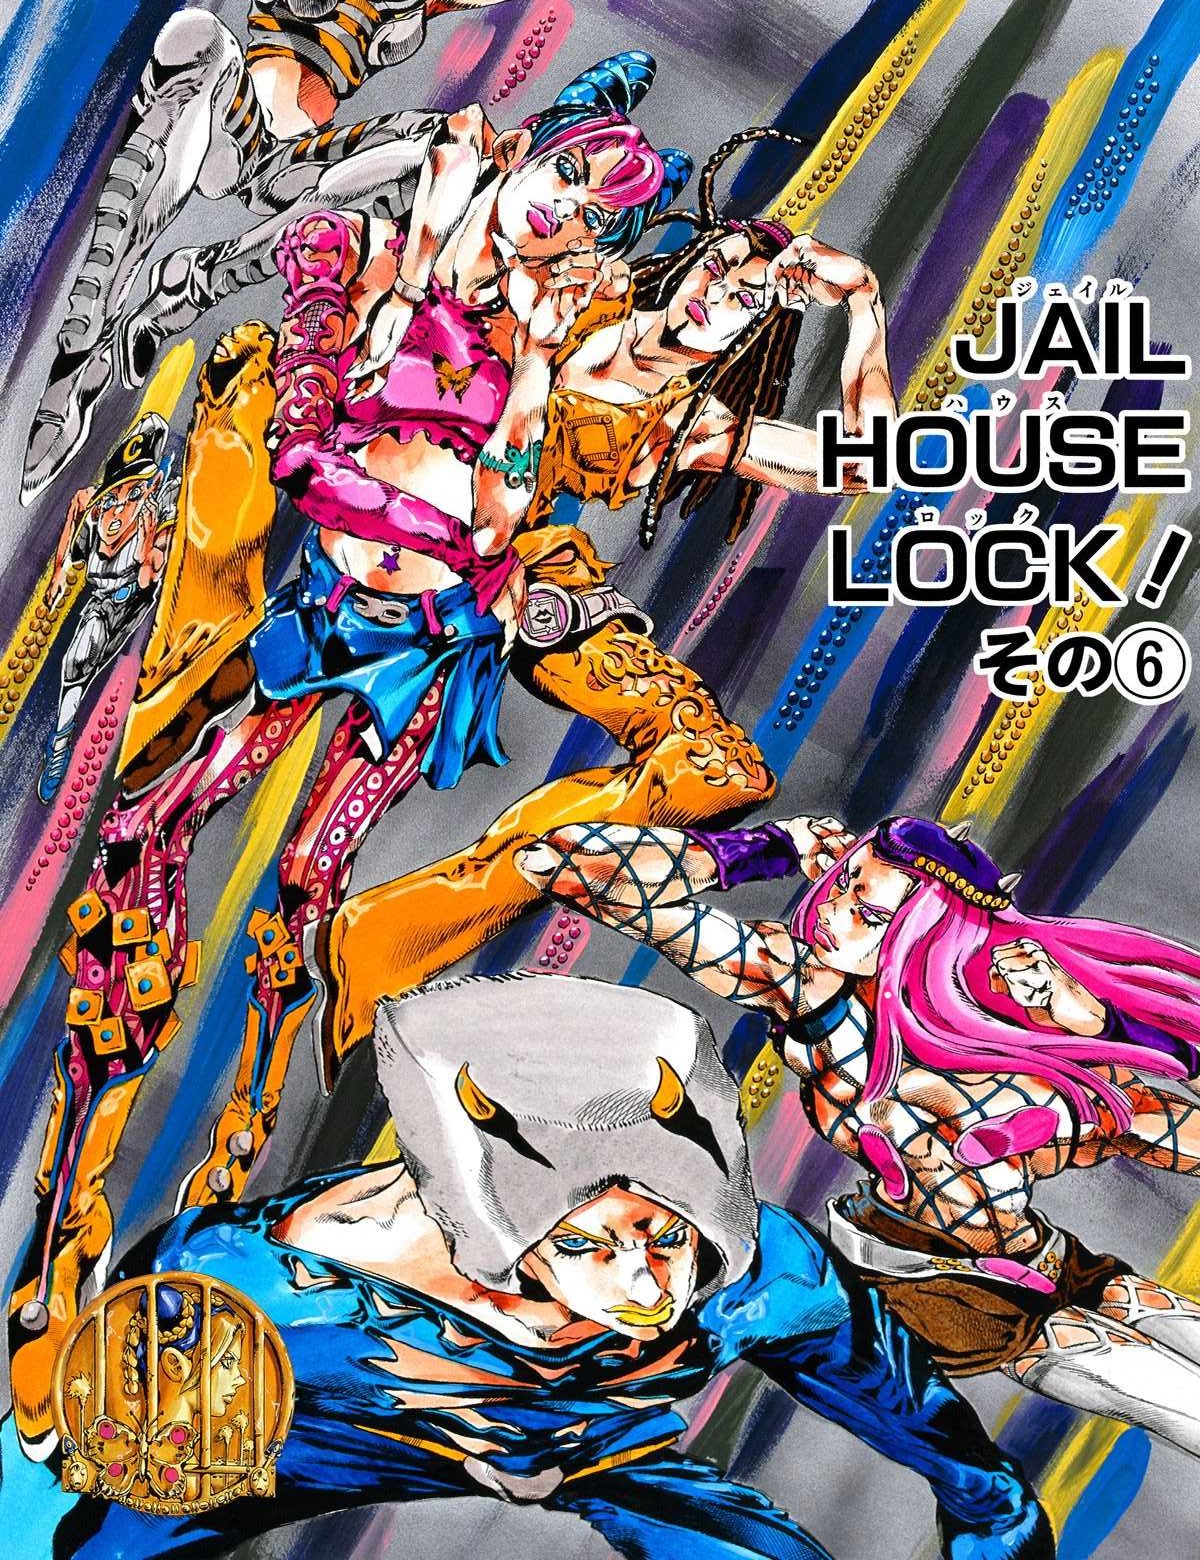 Jail House Lock - JoJo's Bizarre Encyclopedia